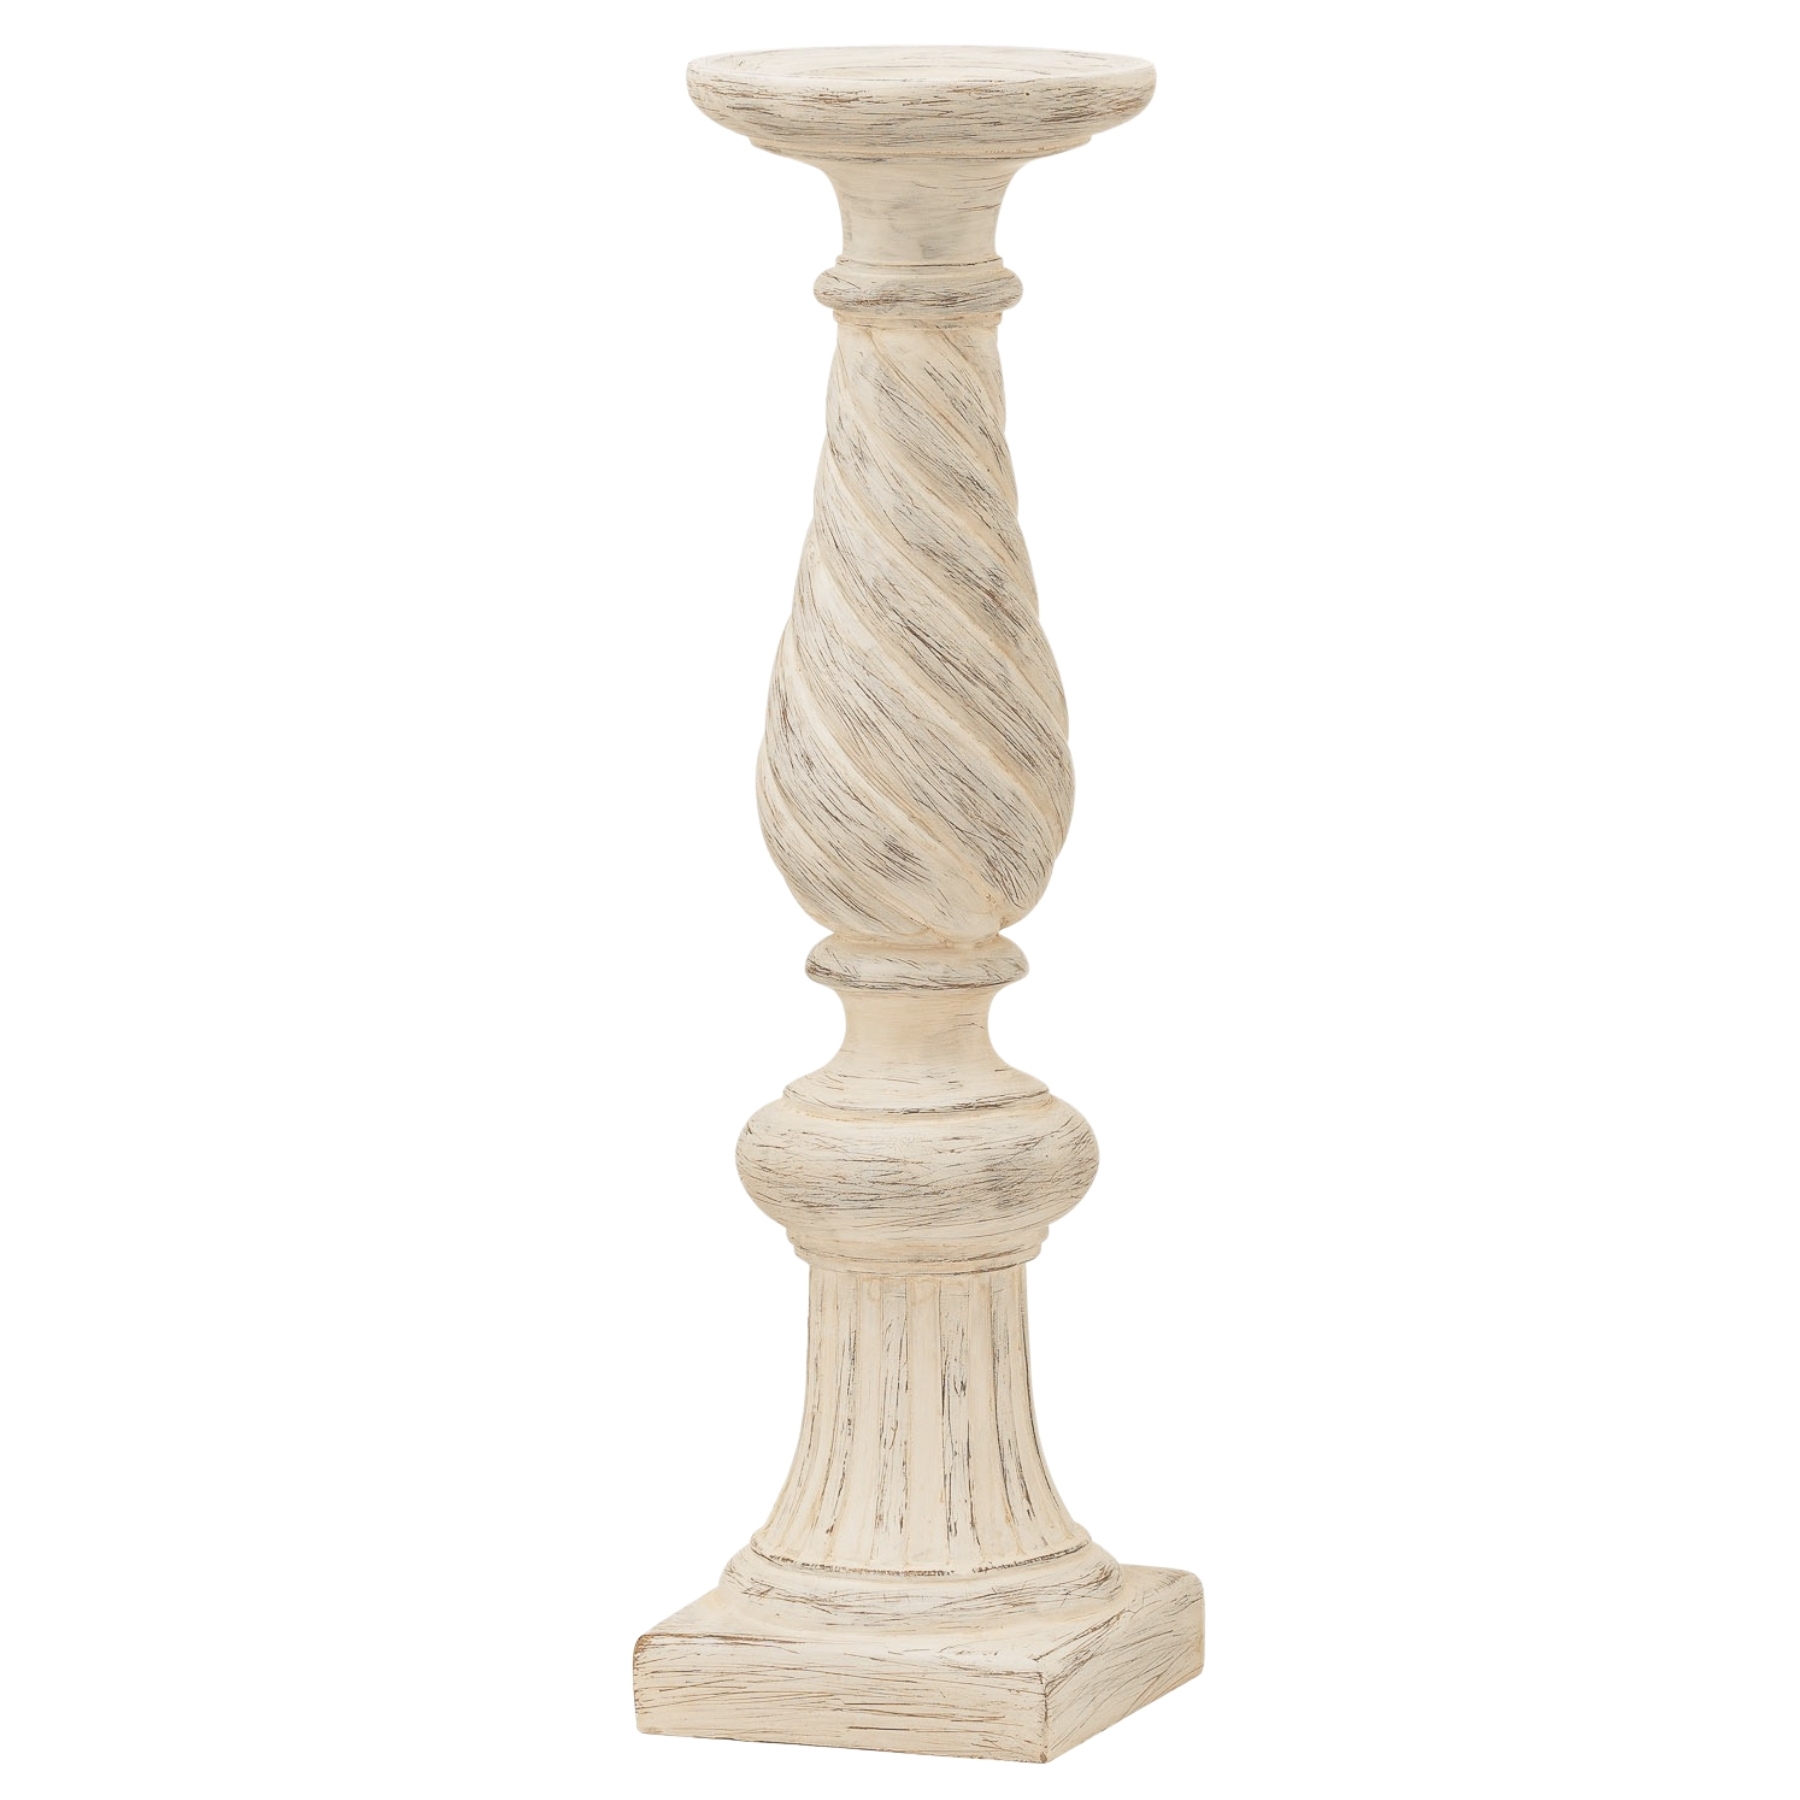 Antique White Large Twisted Candle Column - Image 1